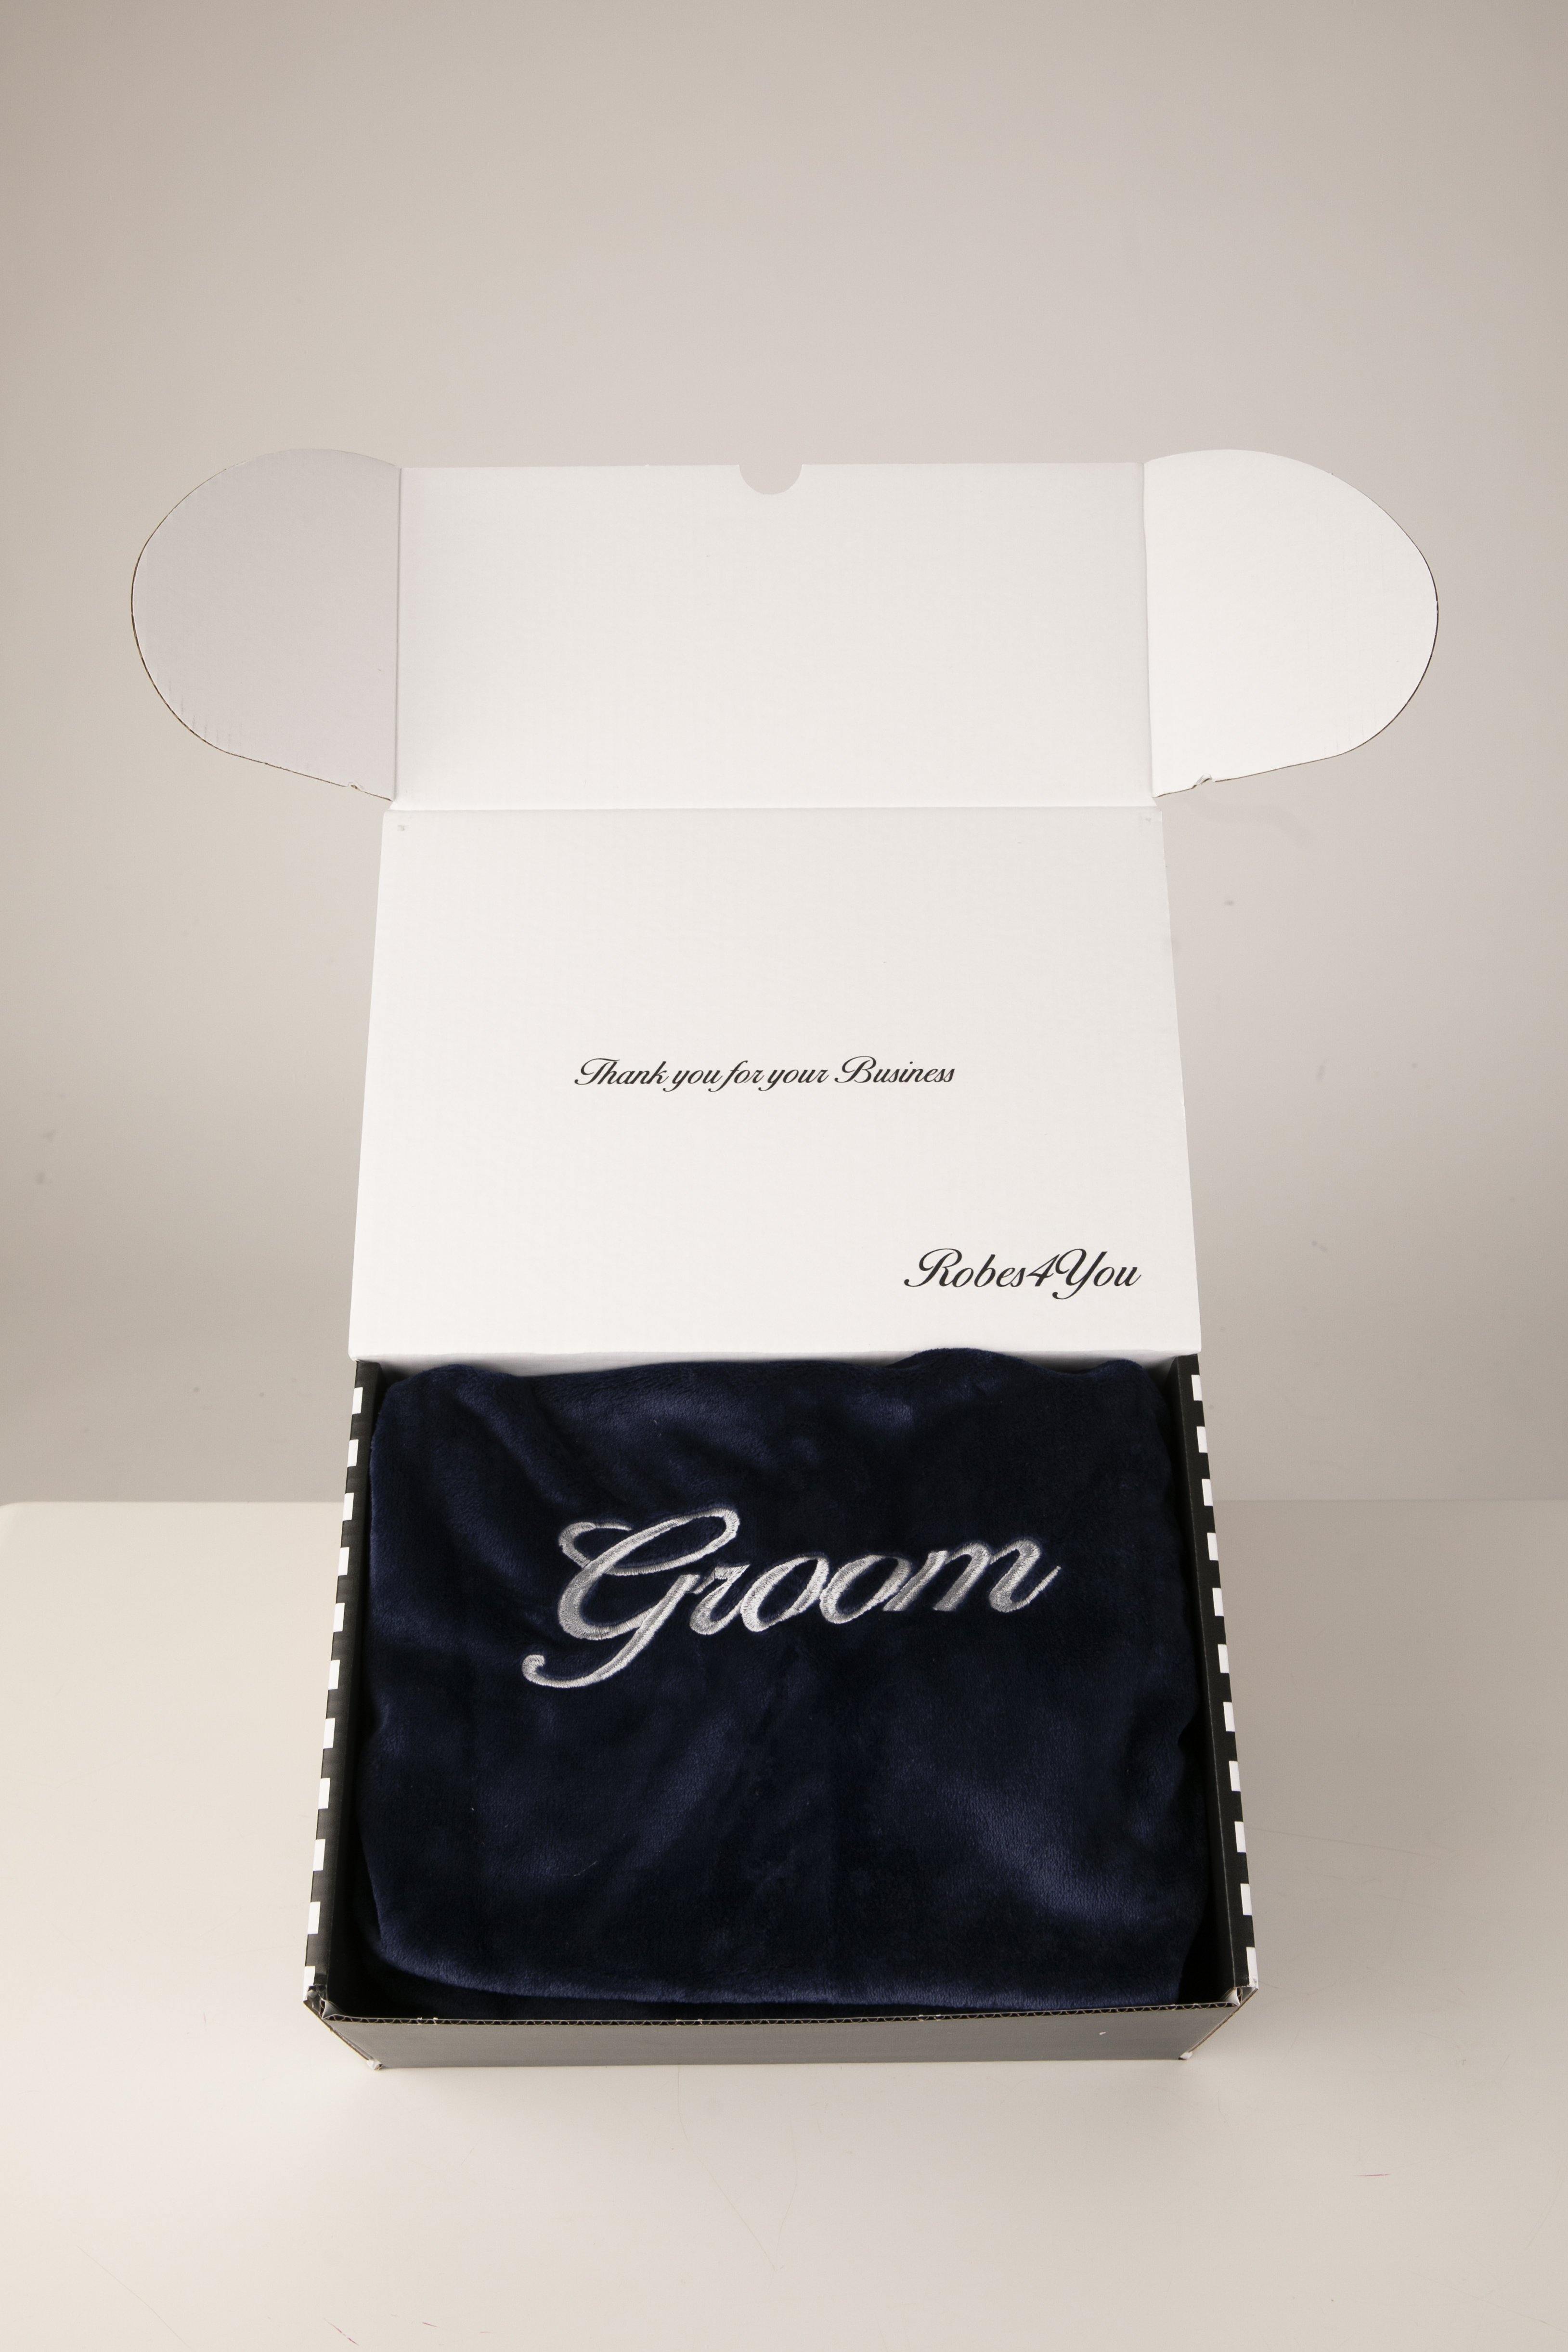 Groom/Groomsman Personalised Luxurious Dressing Gown - Robes 4 You